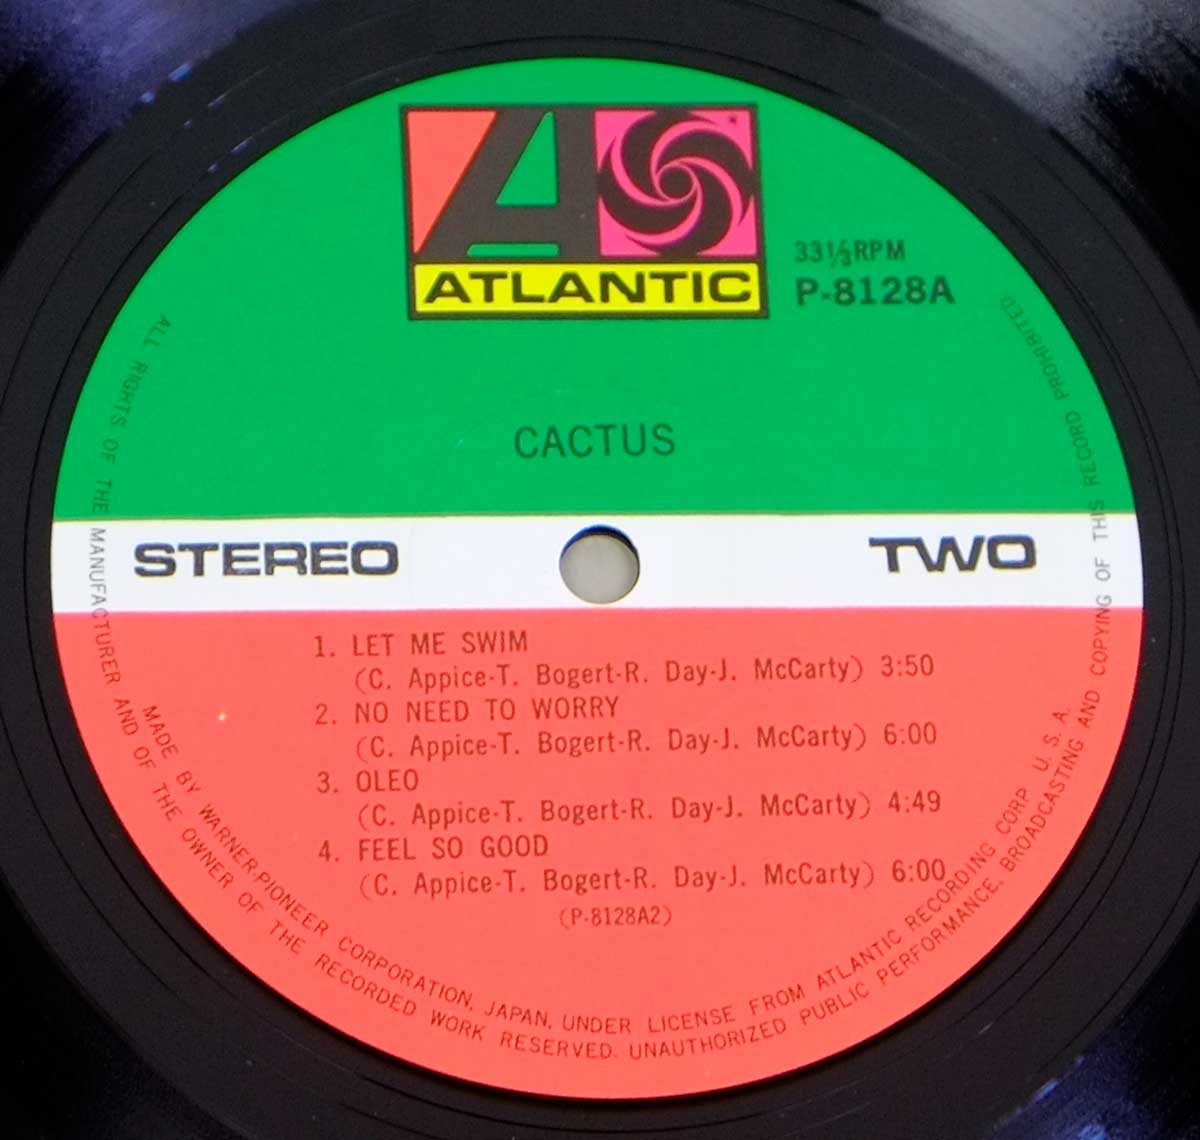 Close up Photo of Cactus Record Label